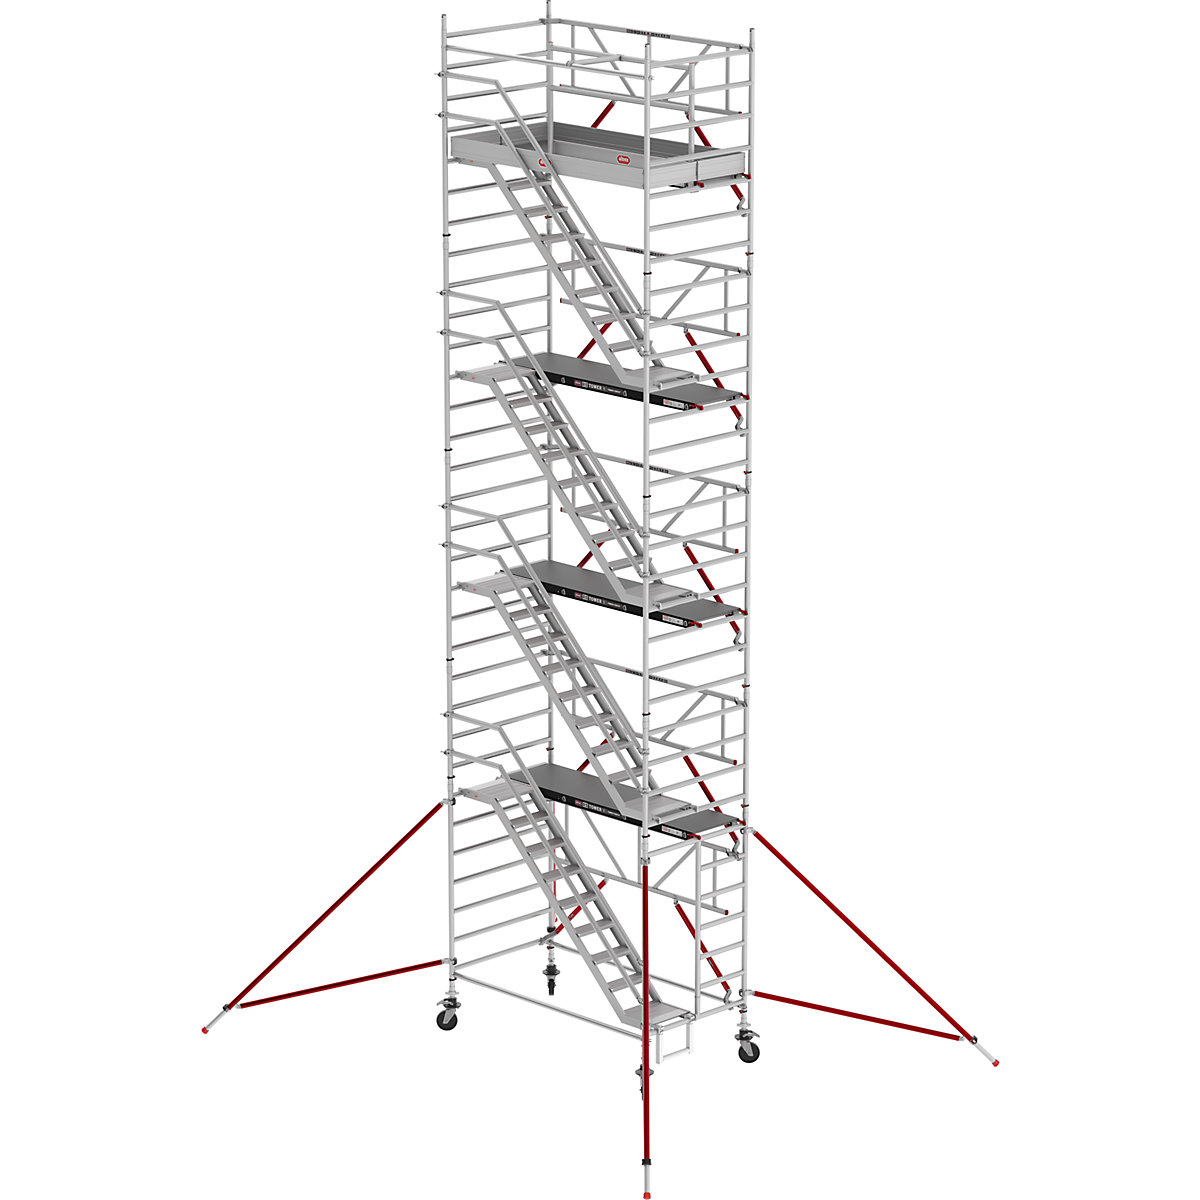 Oder s stopnicami RS TOWER 53, širok – Altrex, Fiber-Deck®, dolžina 1,85 m, delovna višina 10,20 m